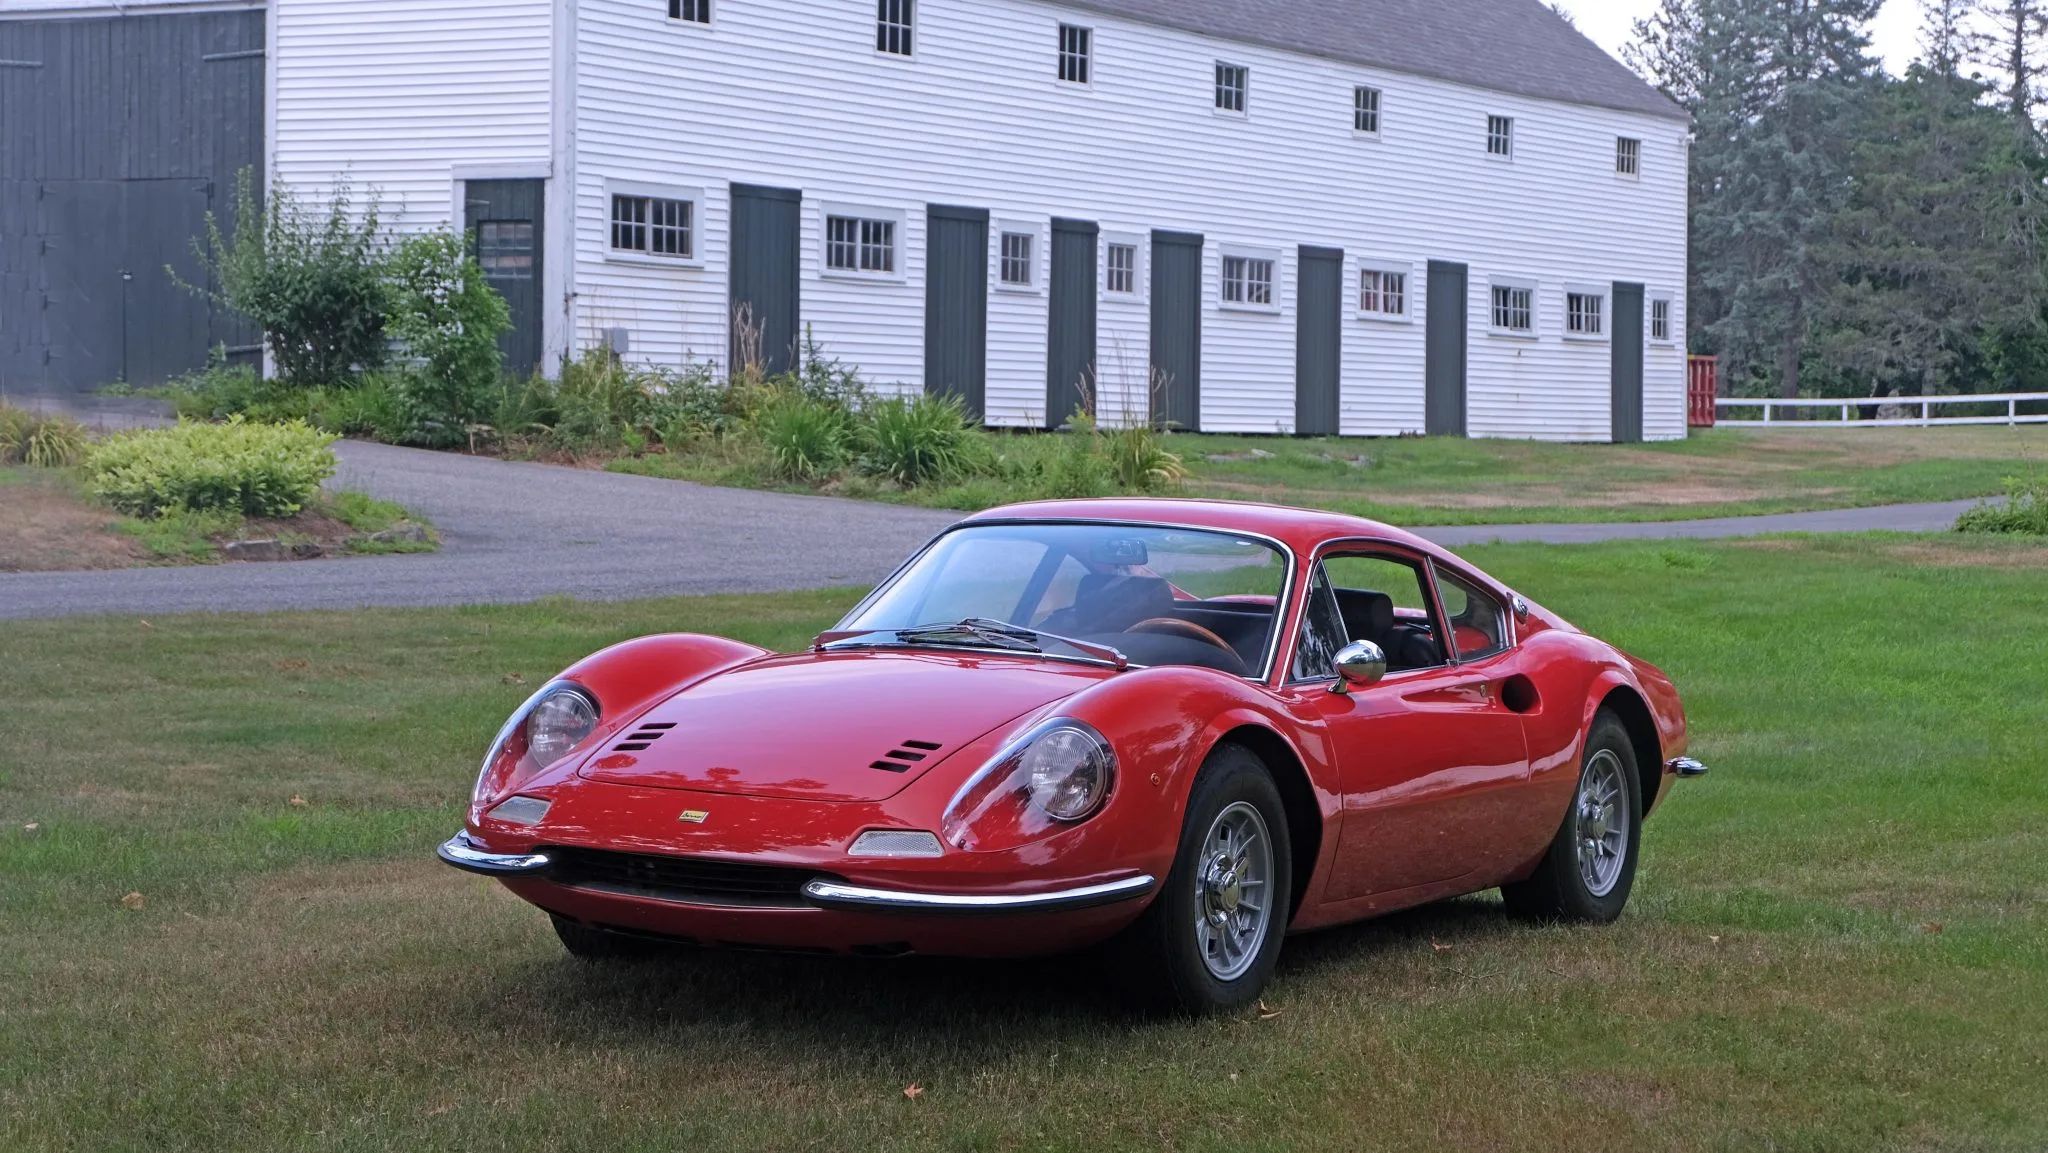 Ferrari dino 206 gt